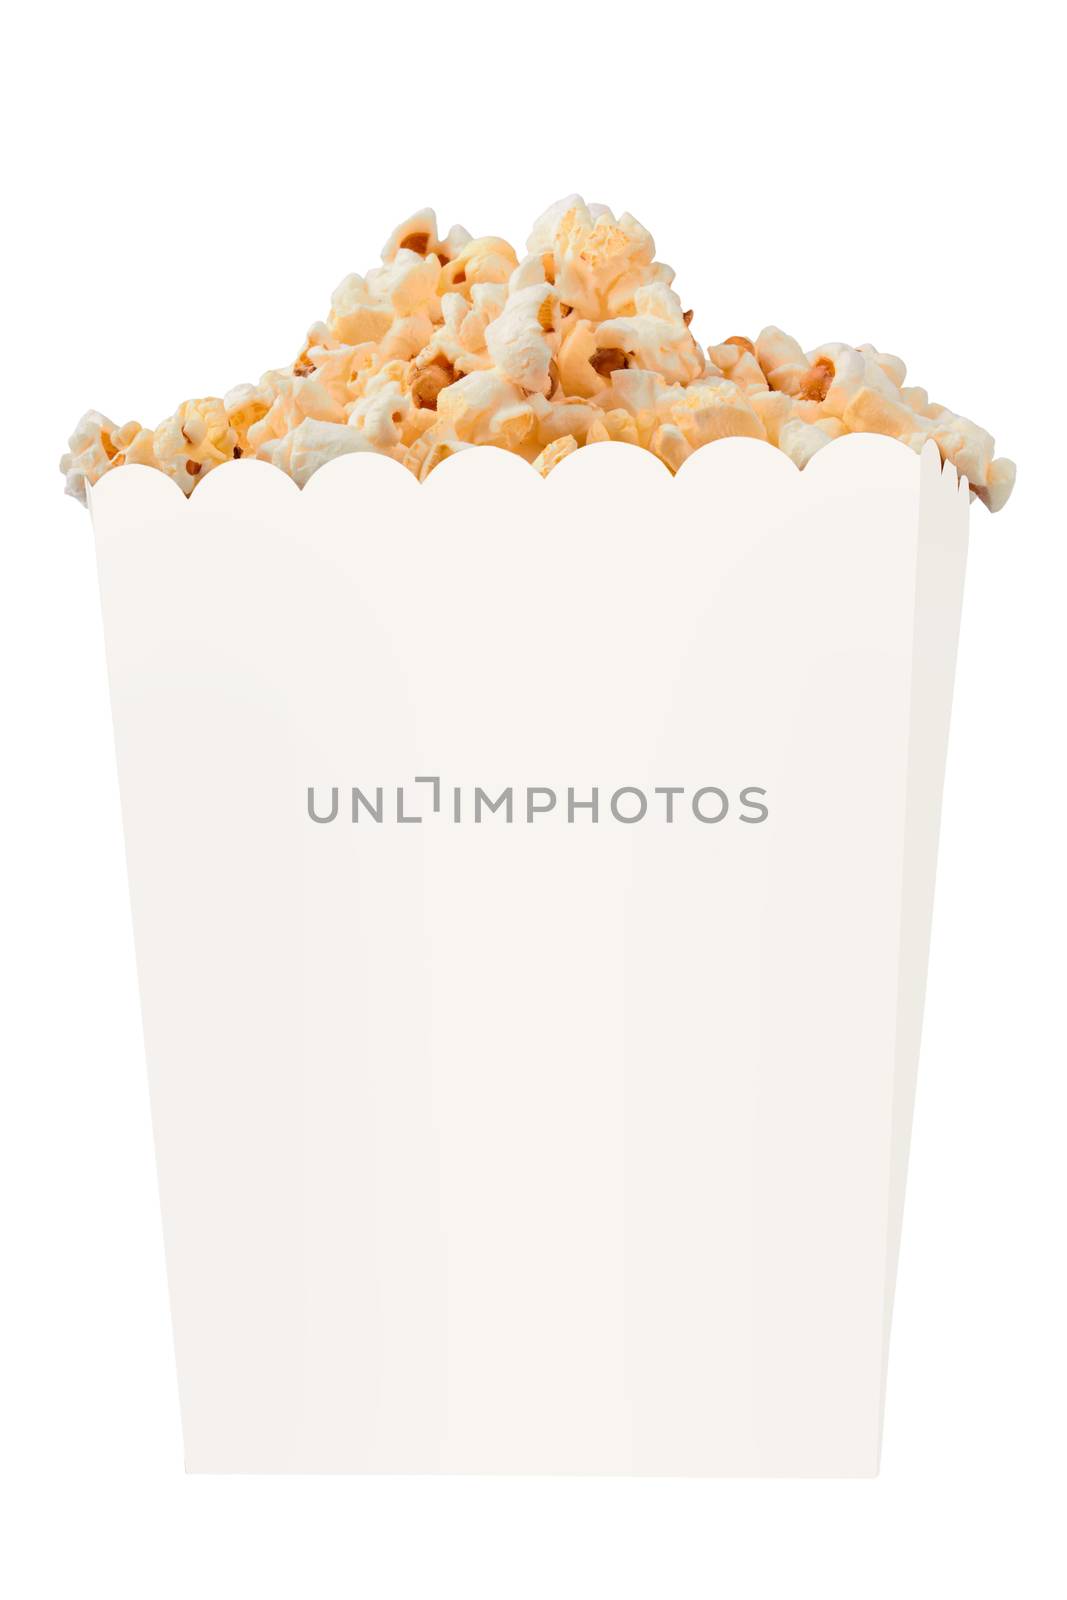 Popcorn in box by pioneer111